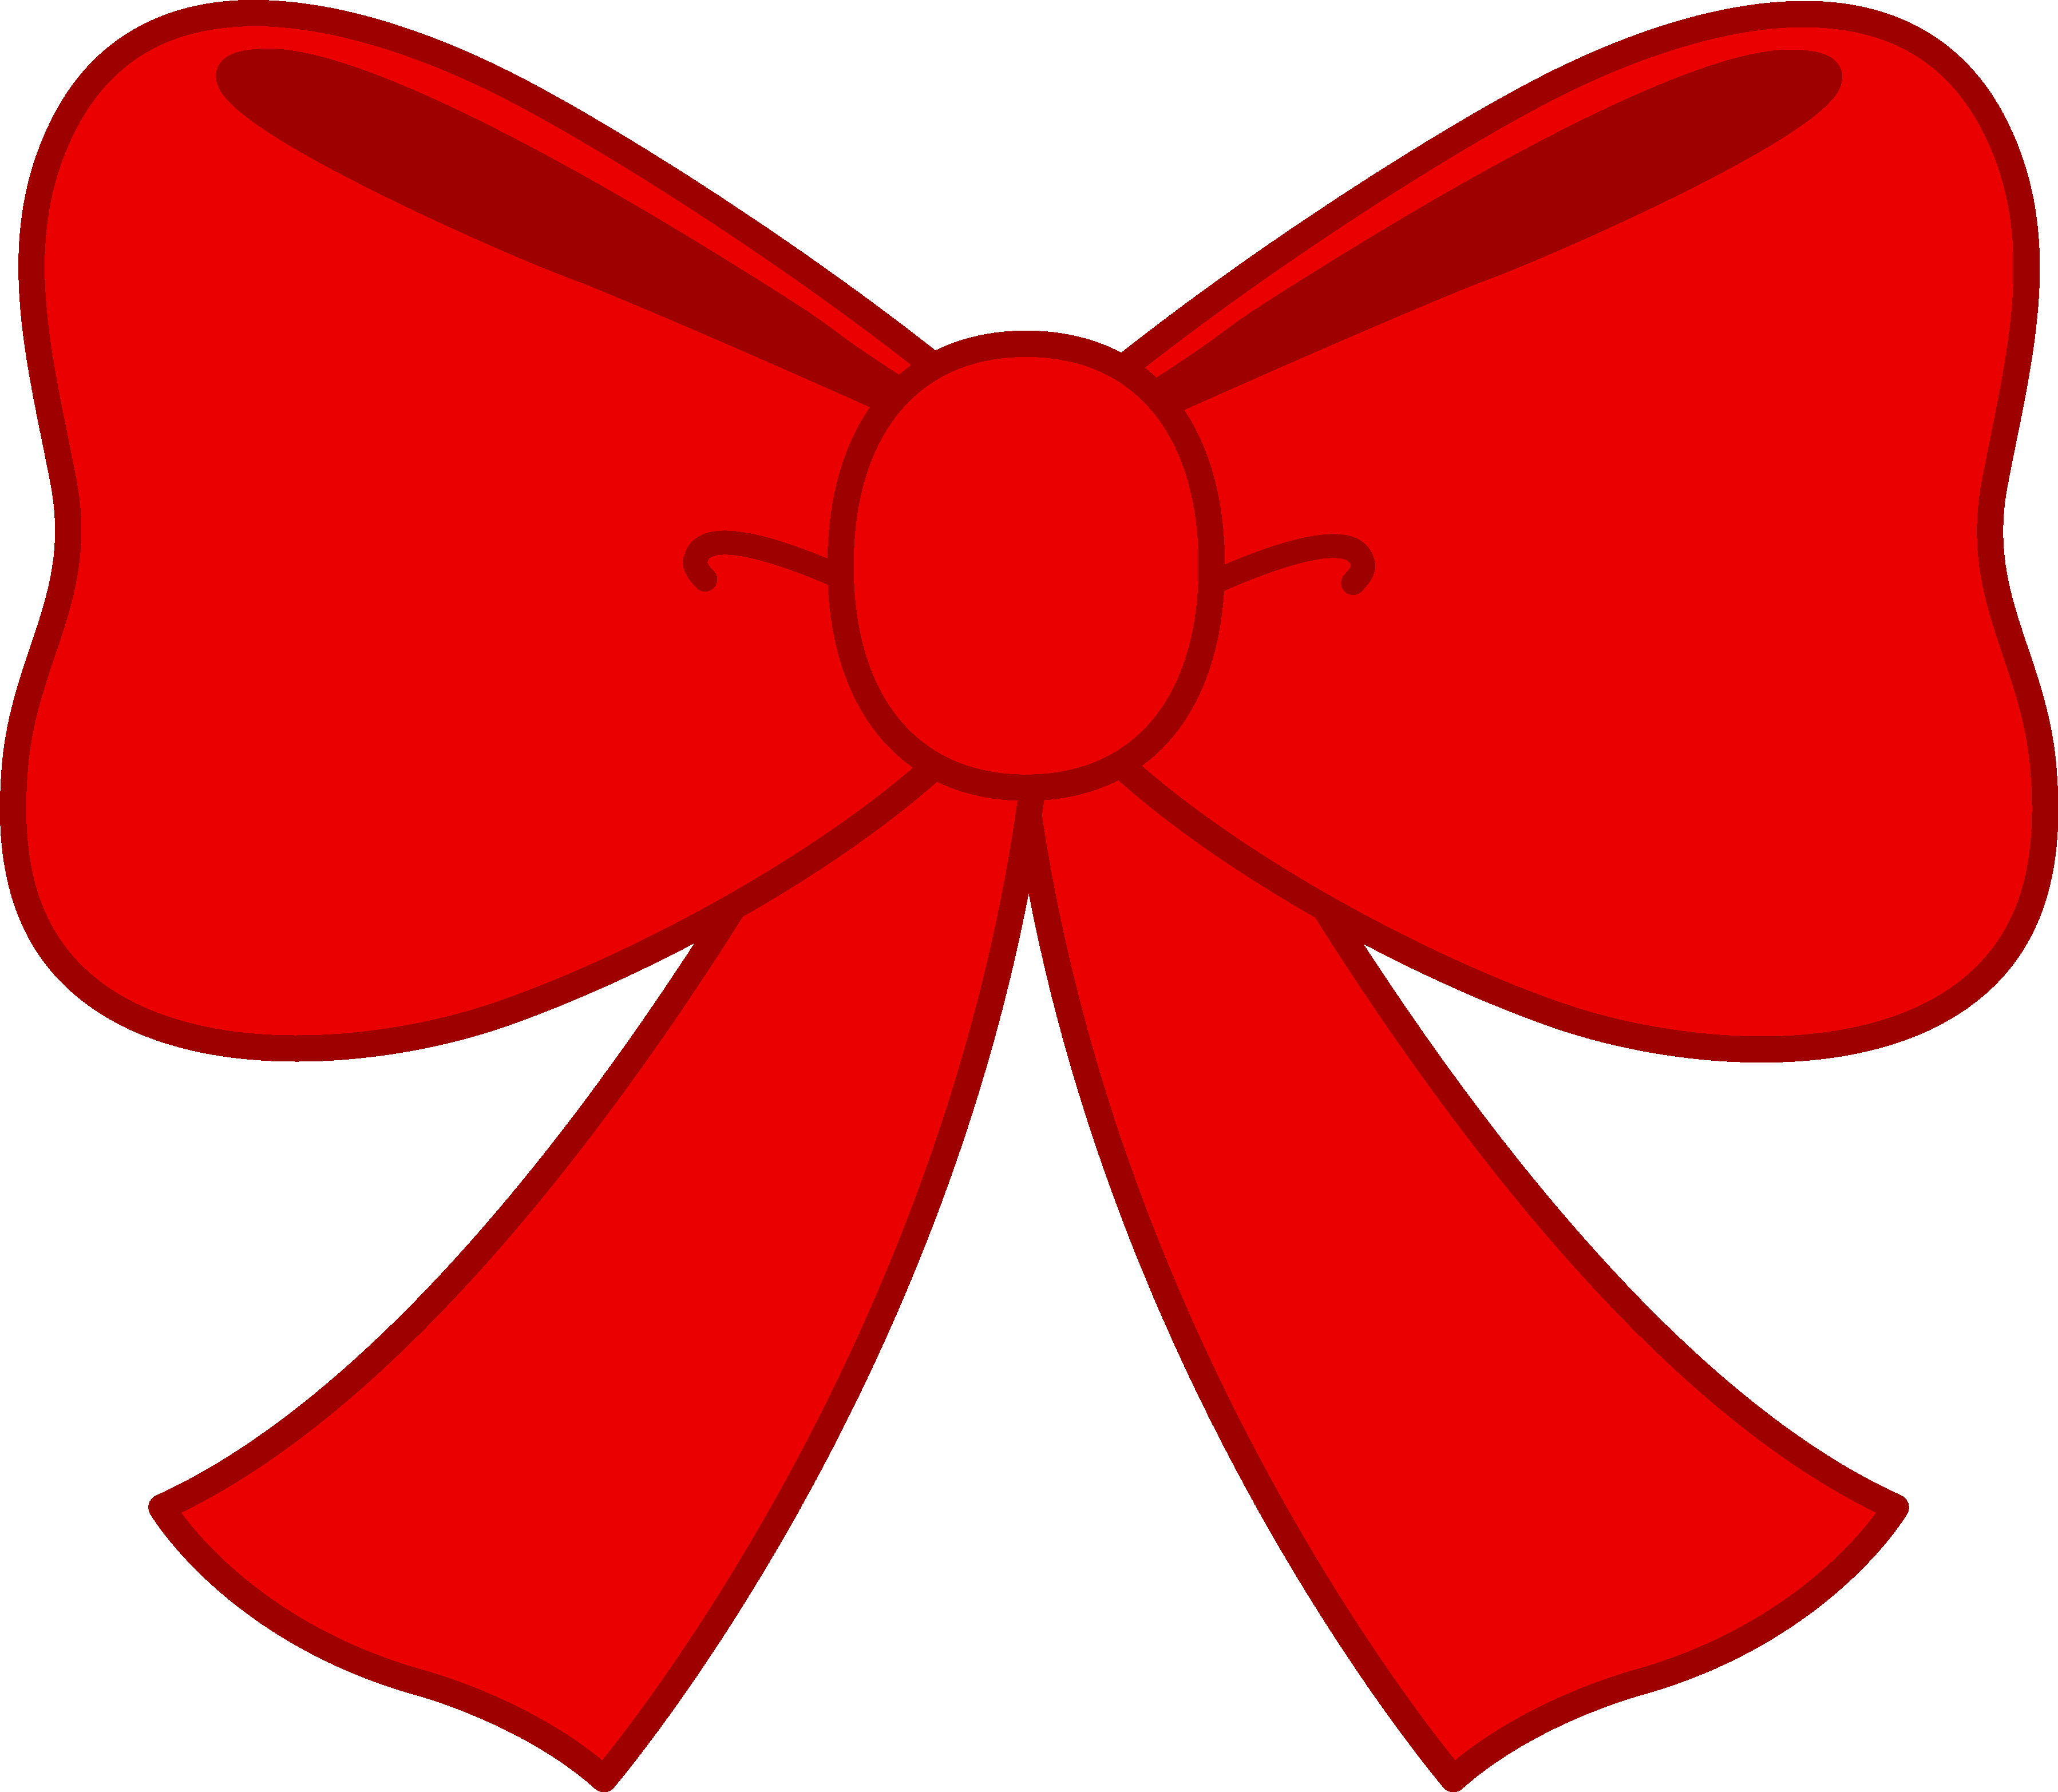 Red ribbon clip art at clker 